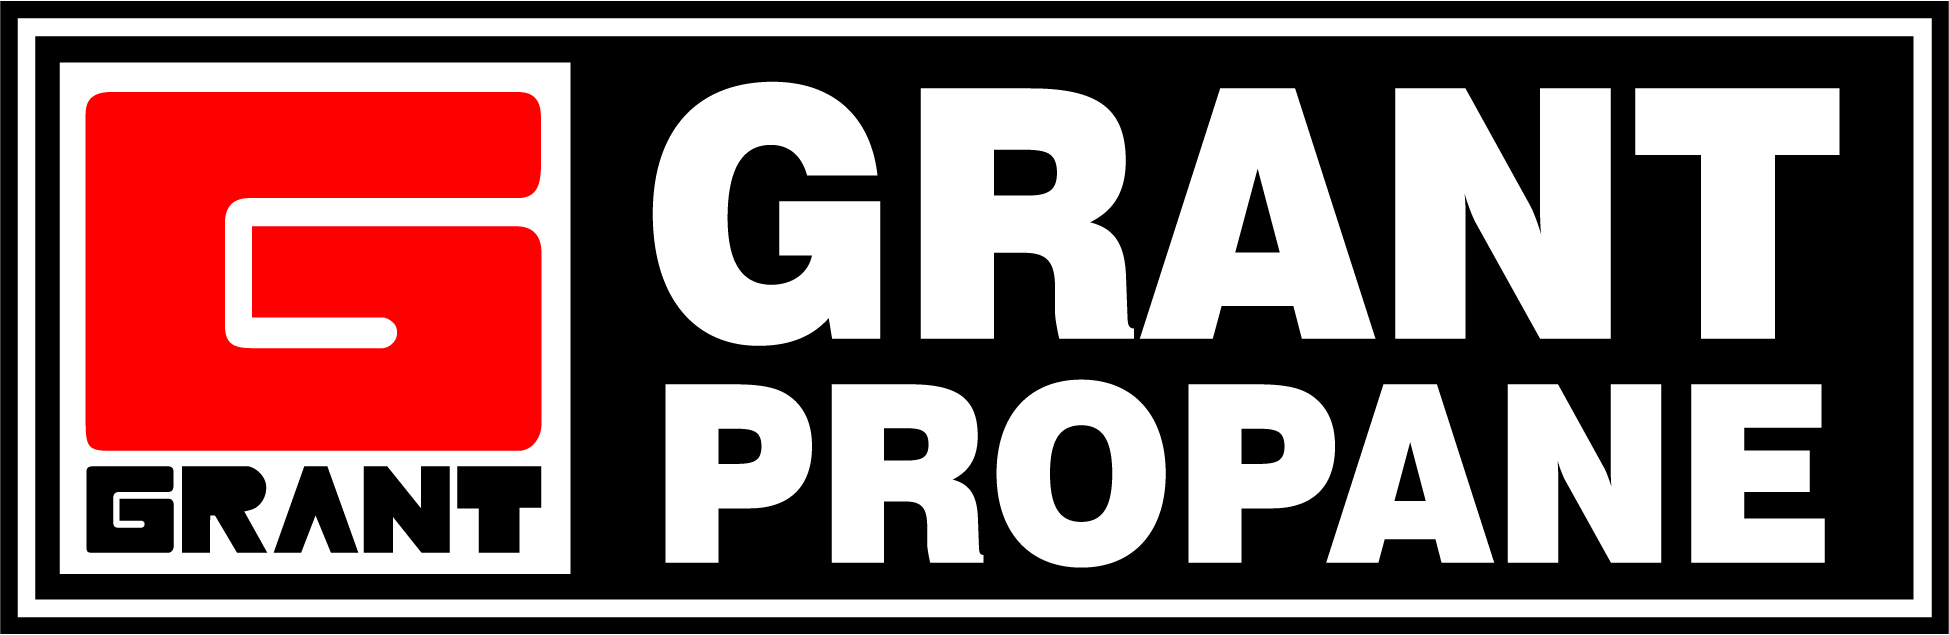 Grant Propane.png